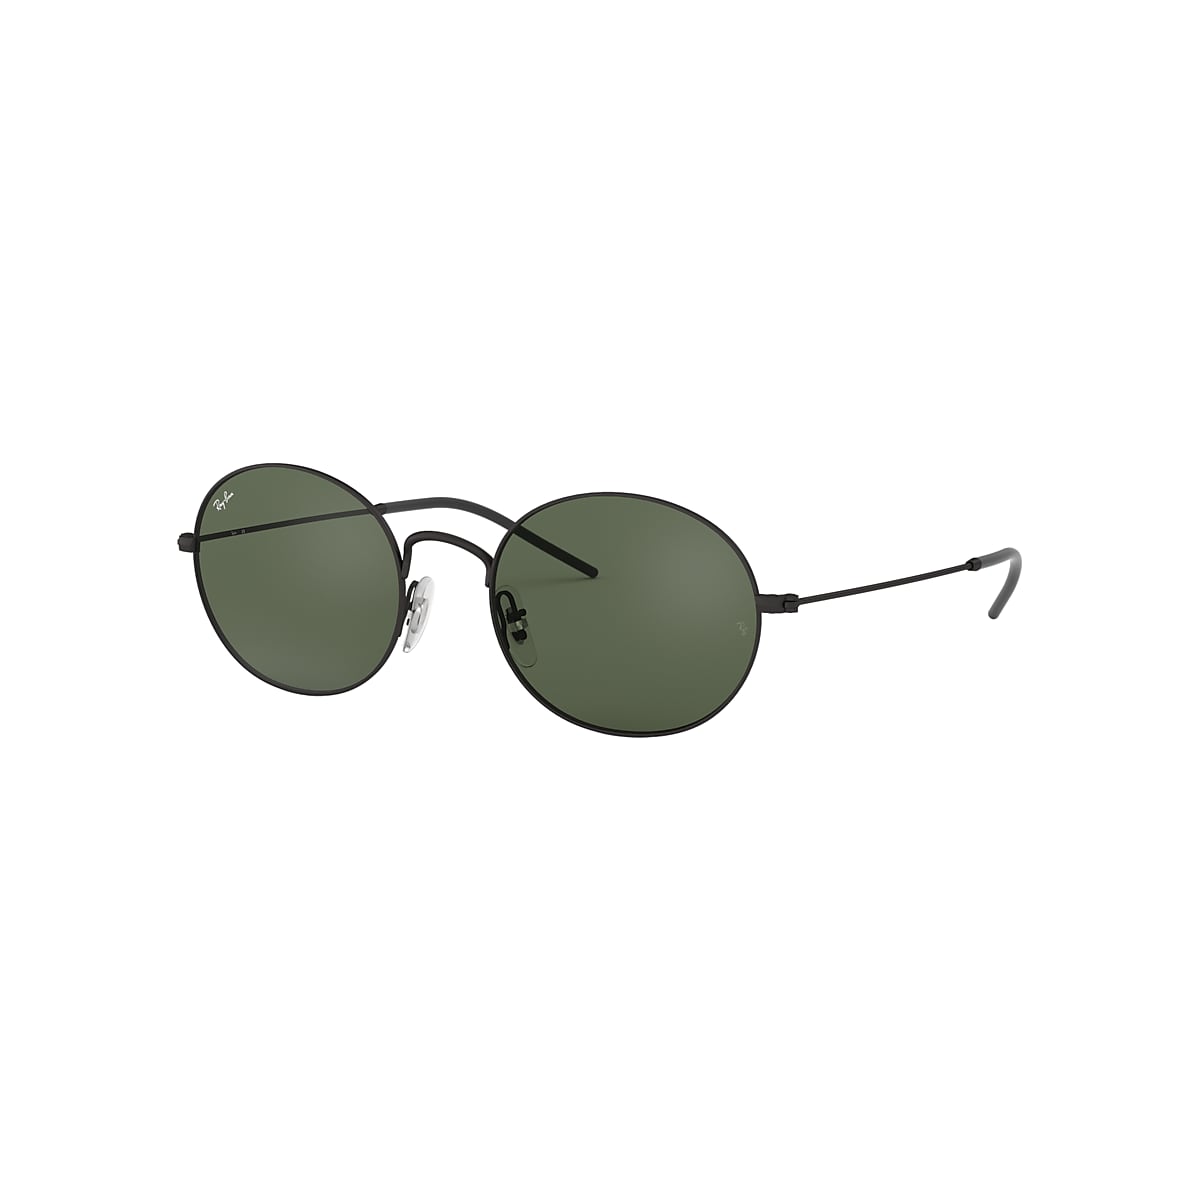 Ray-ban Beat Sunglasses in Black and Green | Ray-Ban®